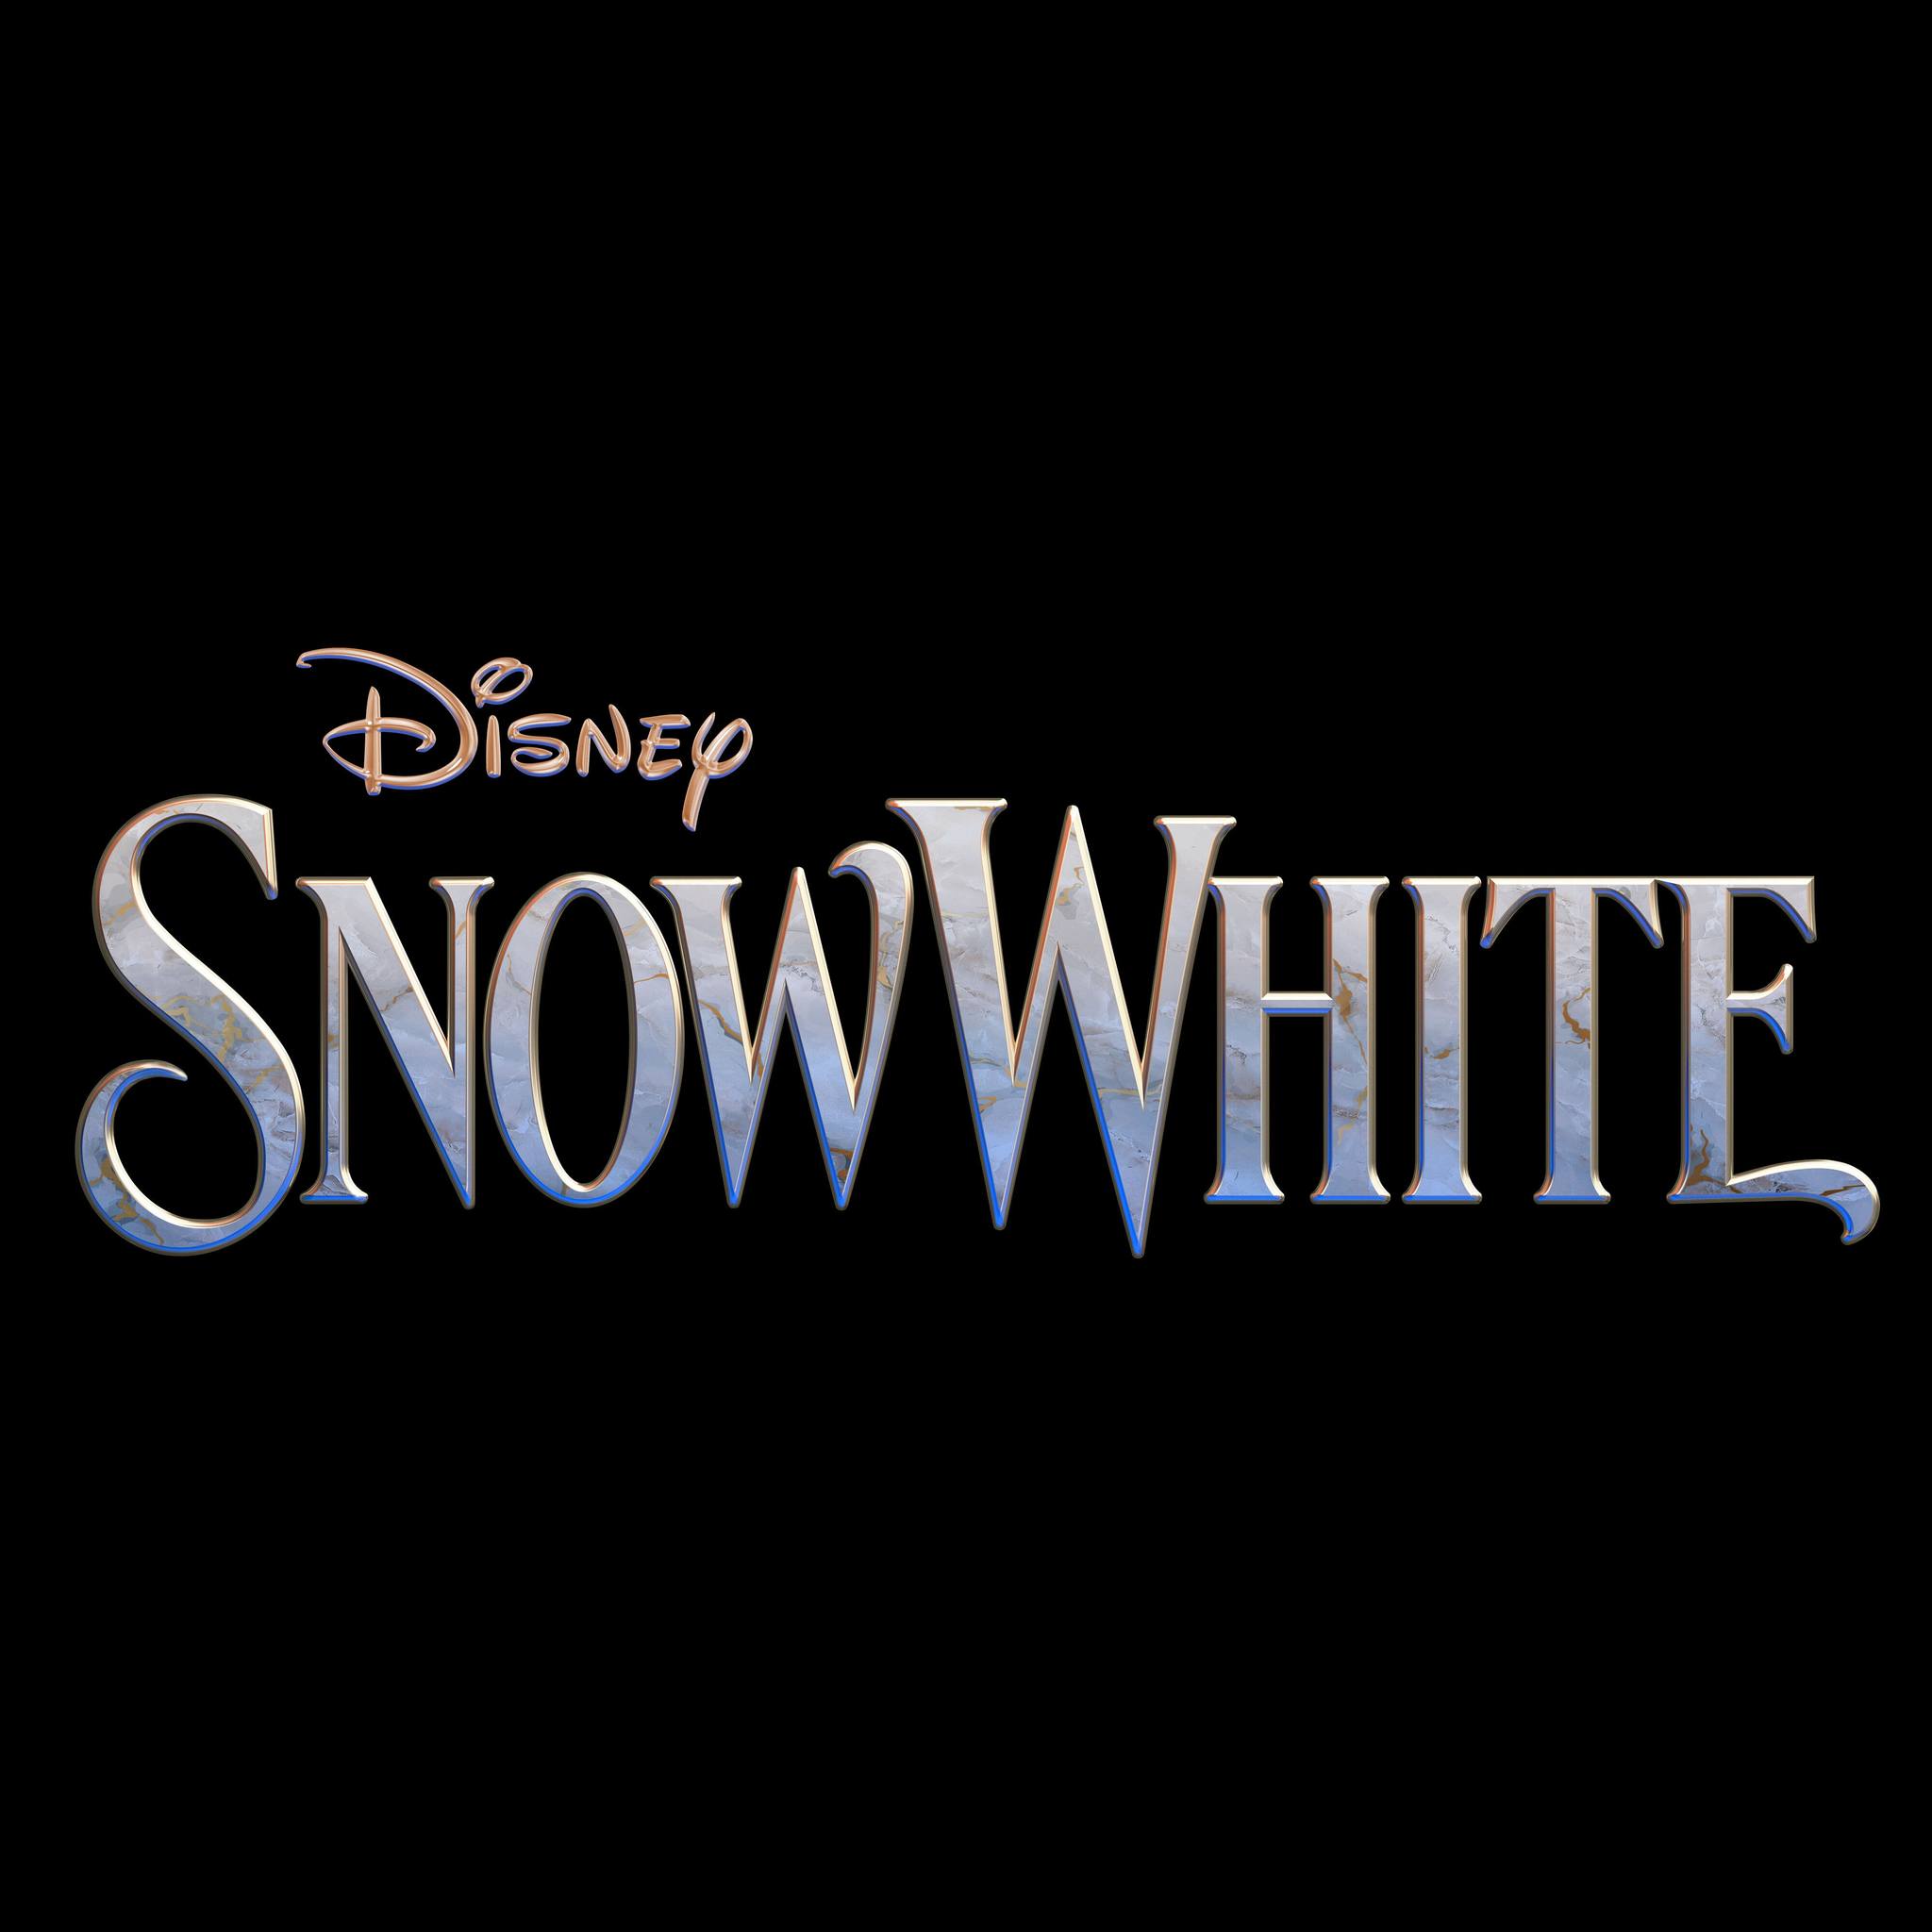 Disney's Snow White - movie still